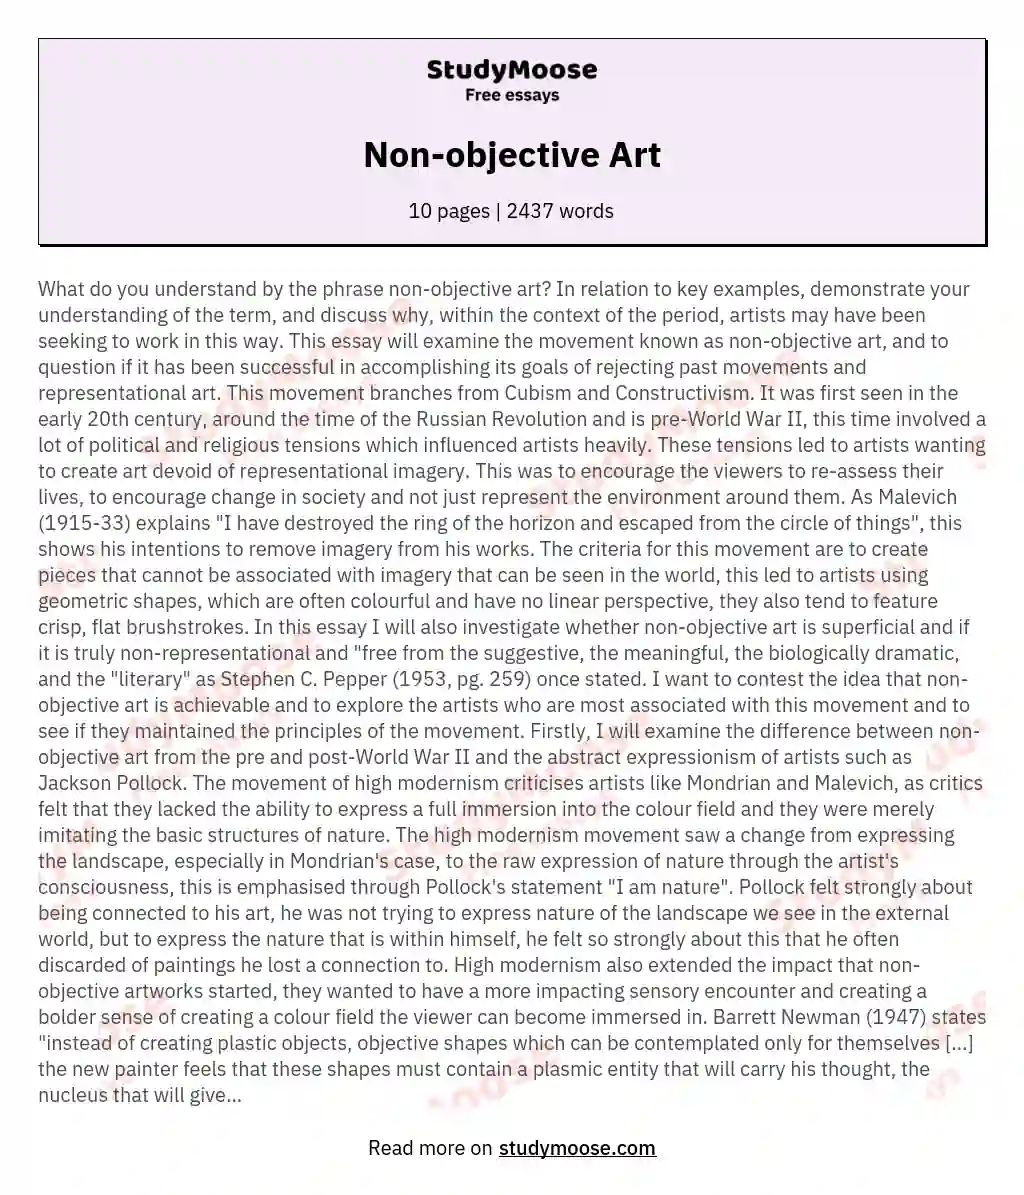 Non-objective Art essay